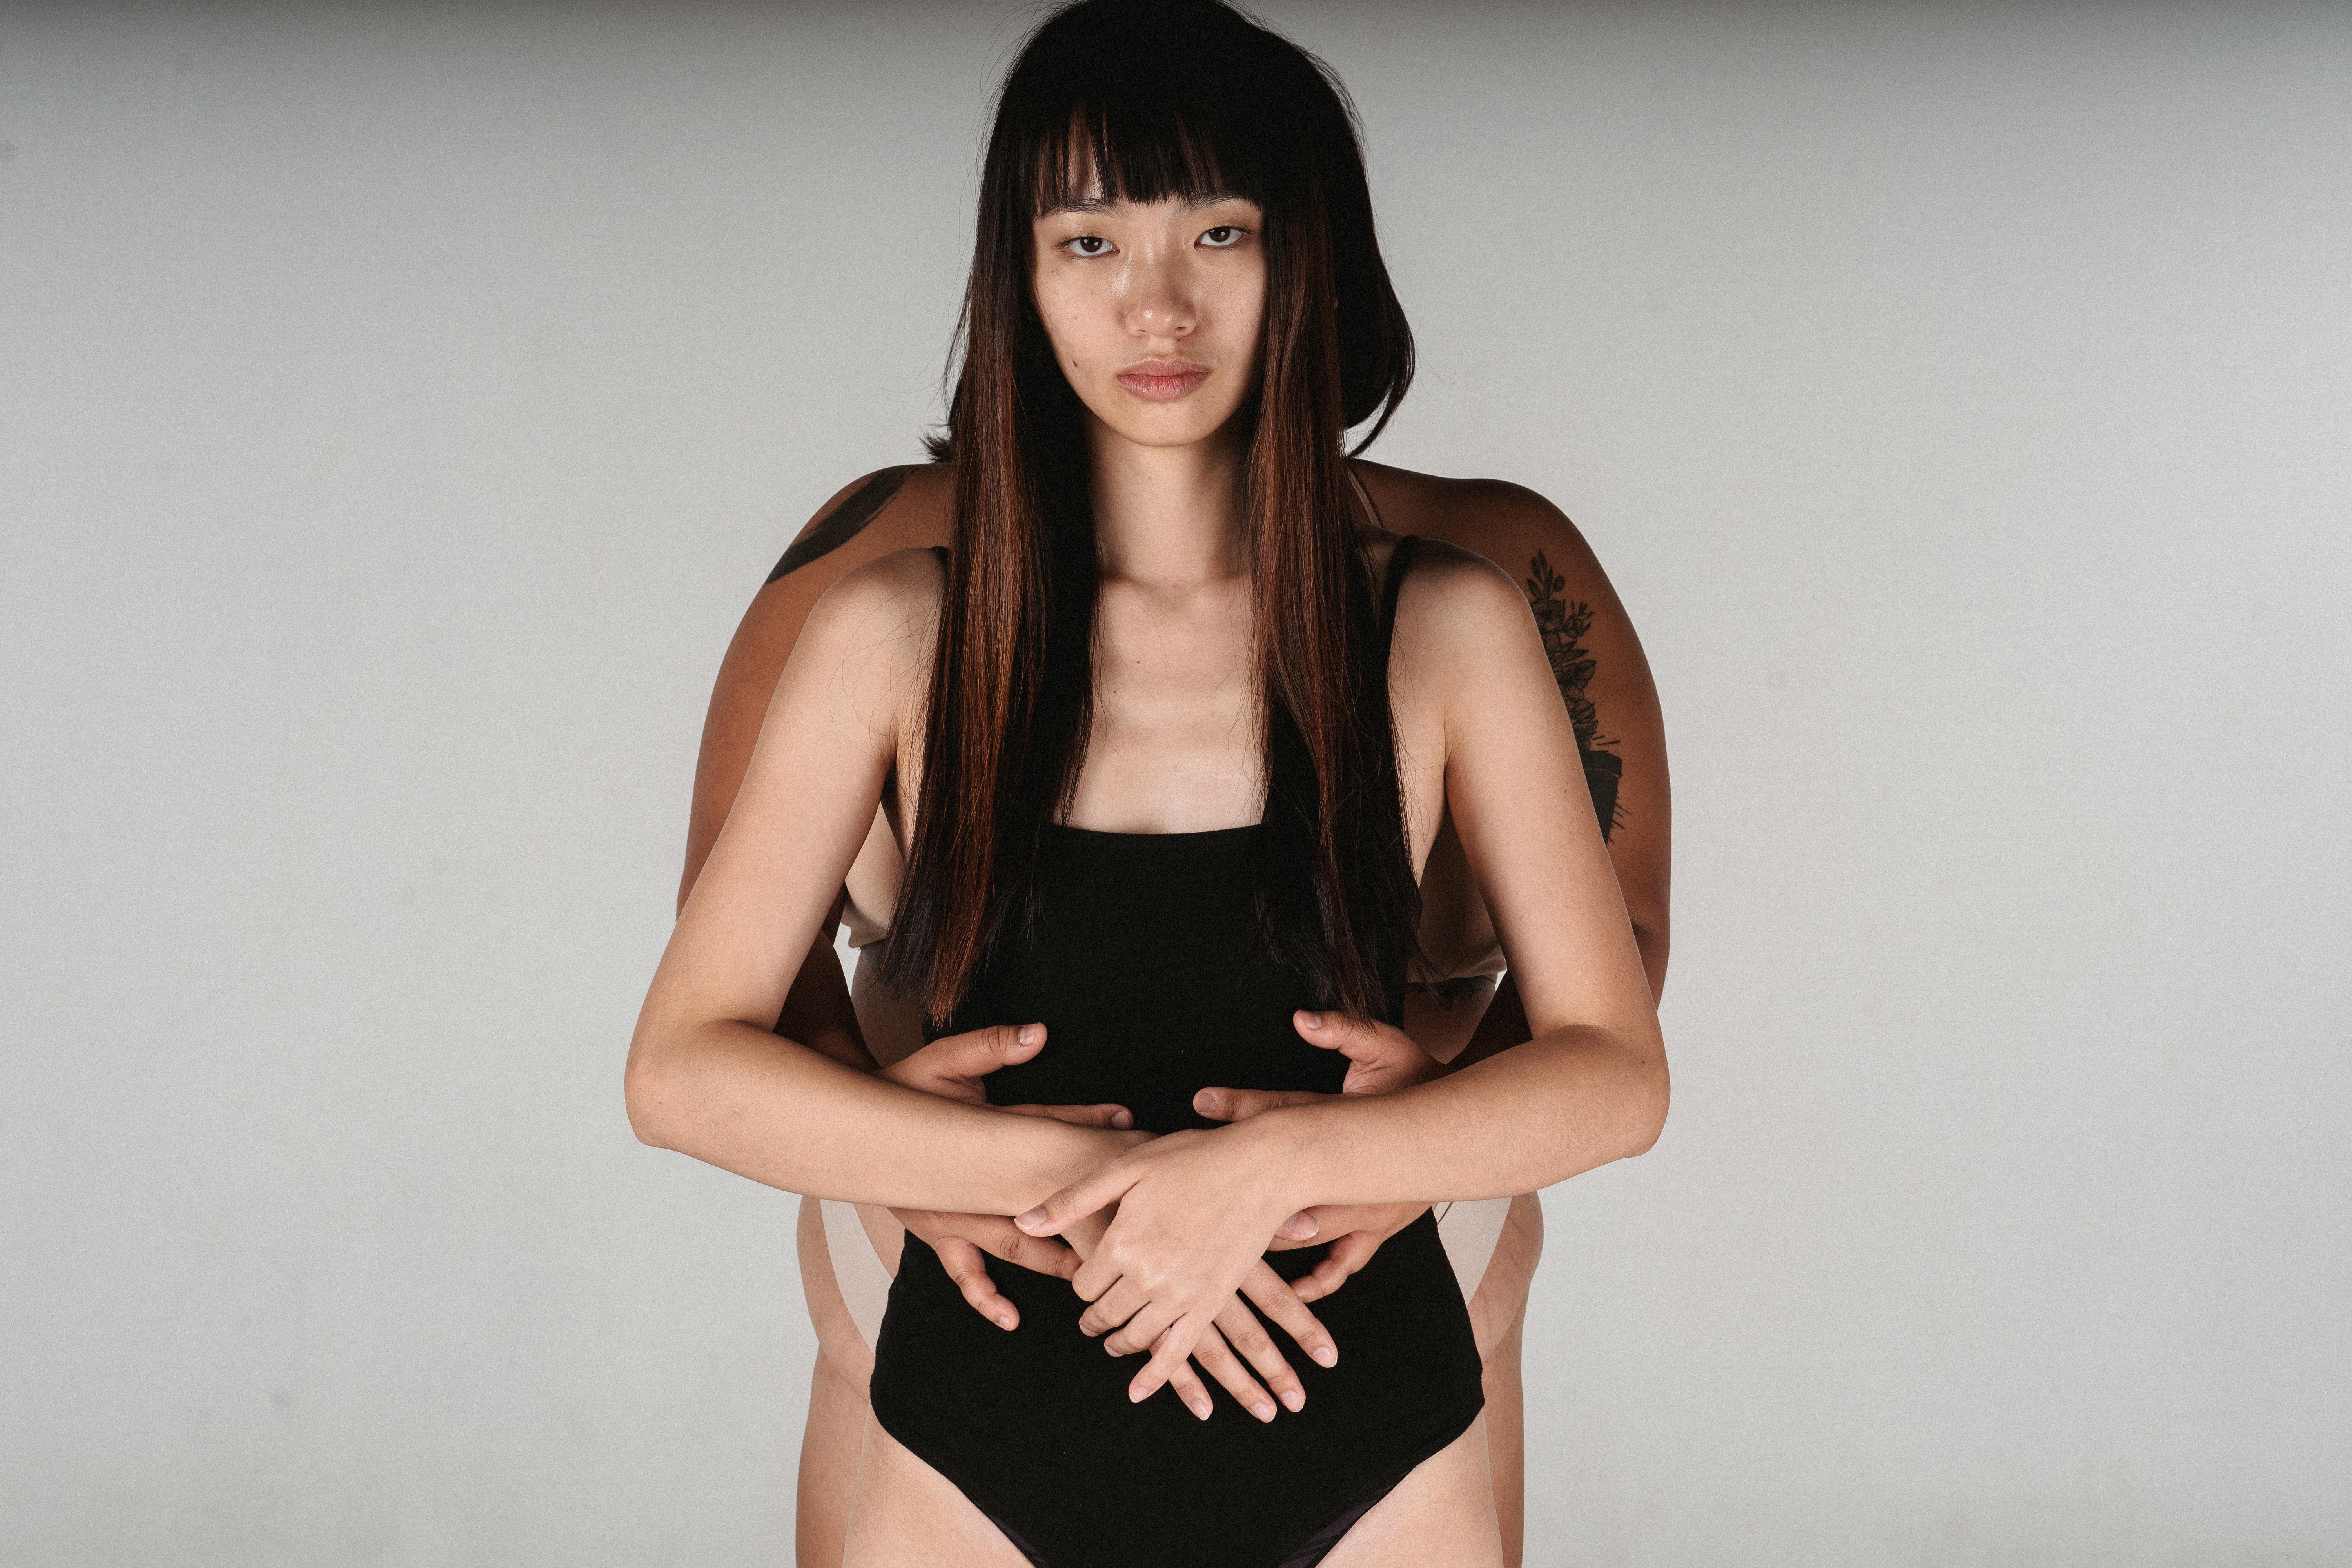 Alluring Asian women in underwear hugging · Free Stock Photo